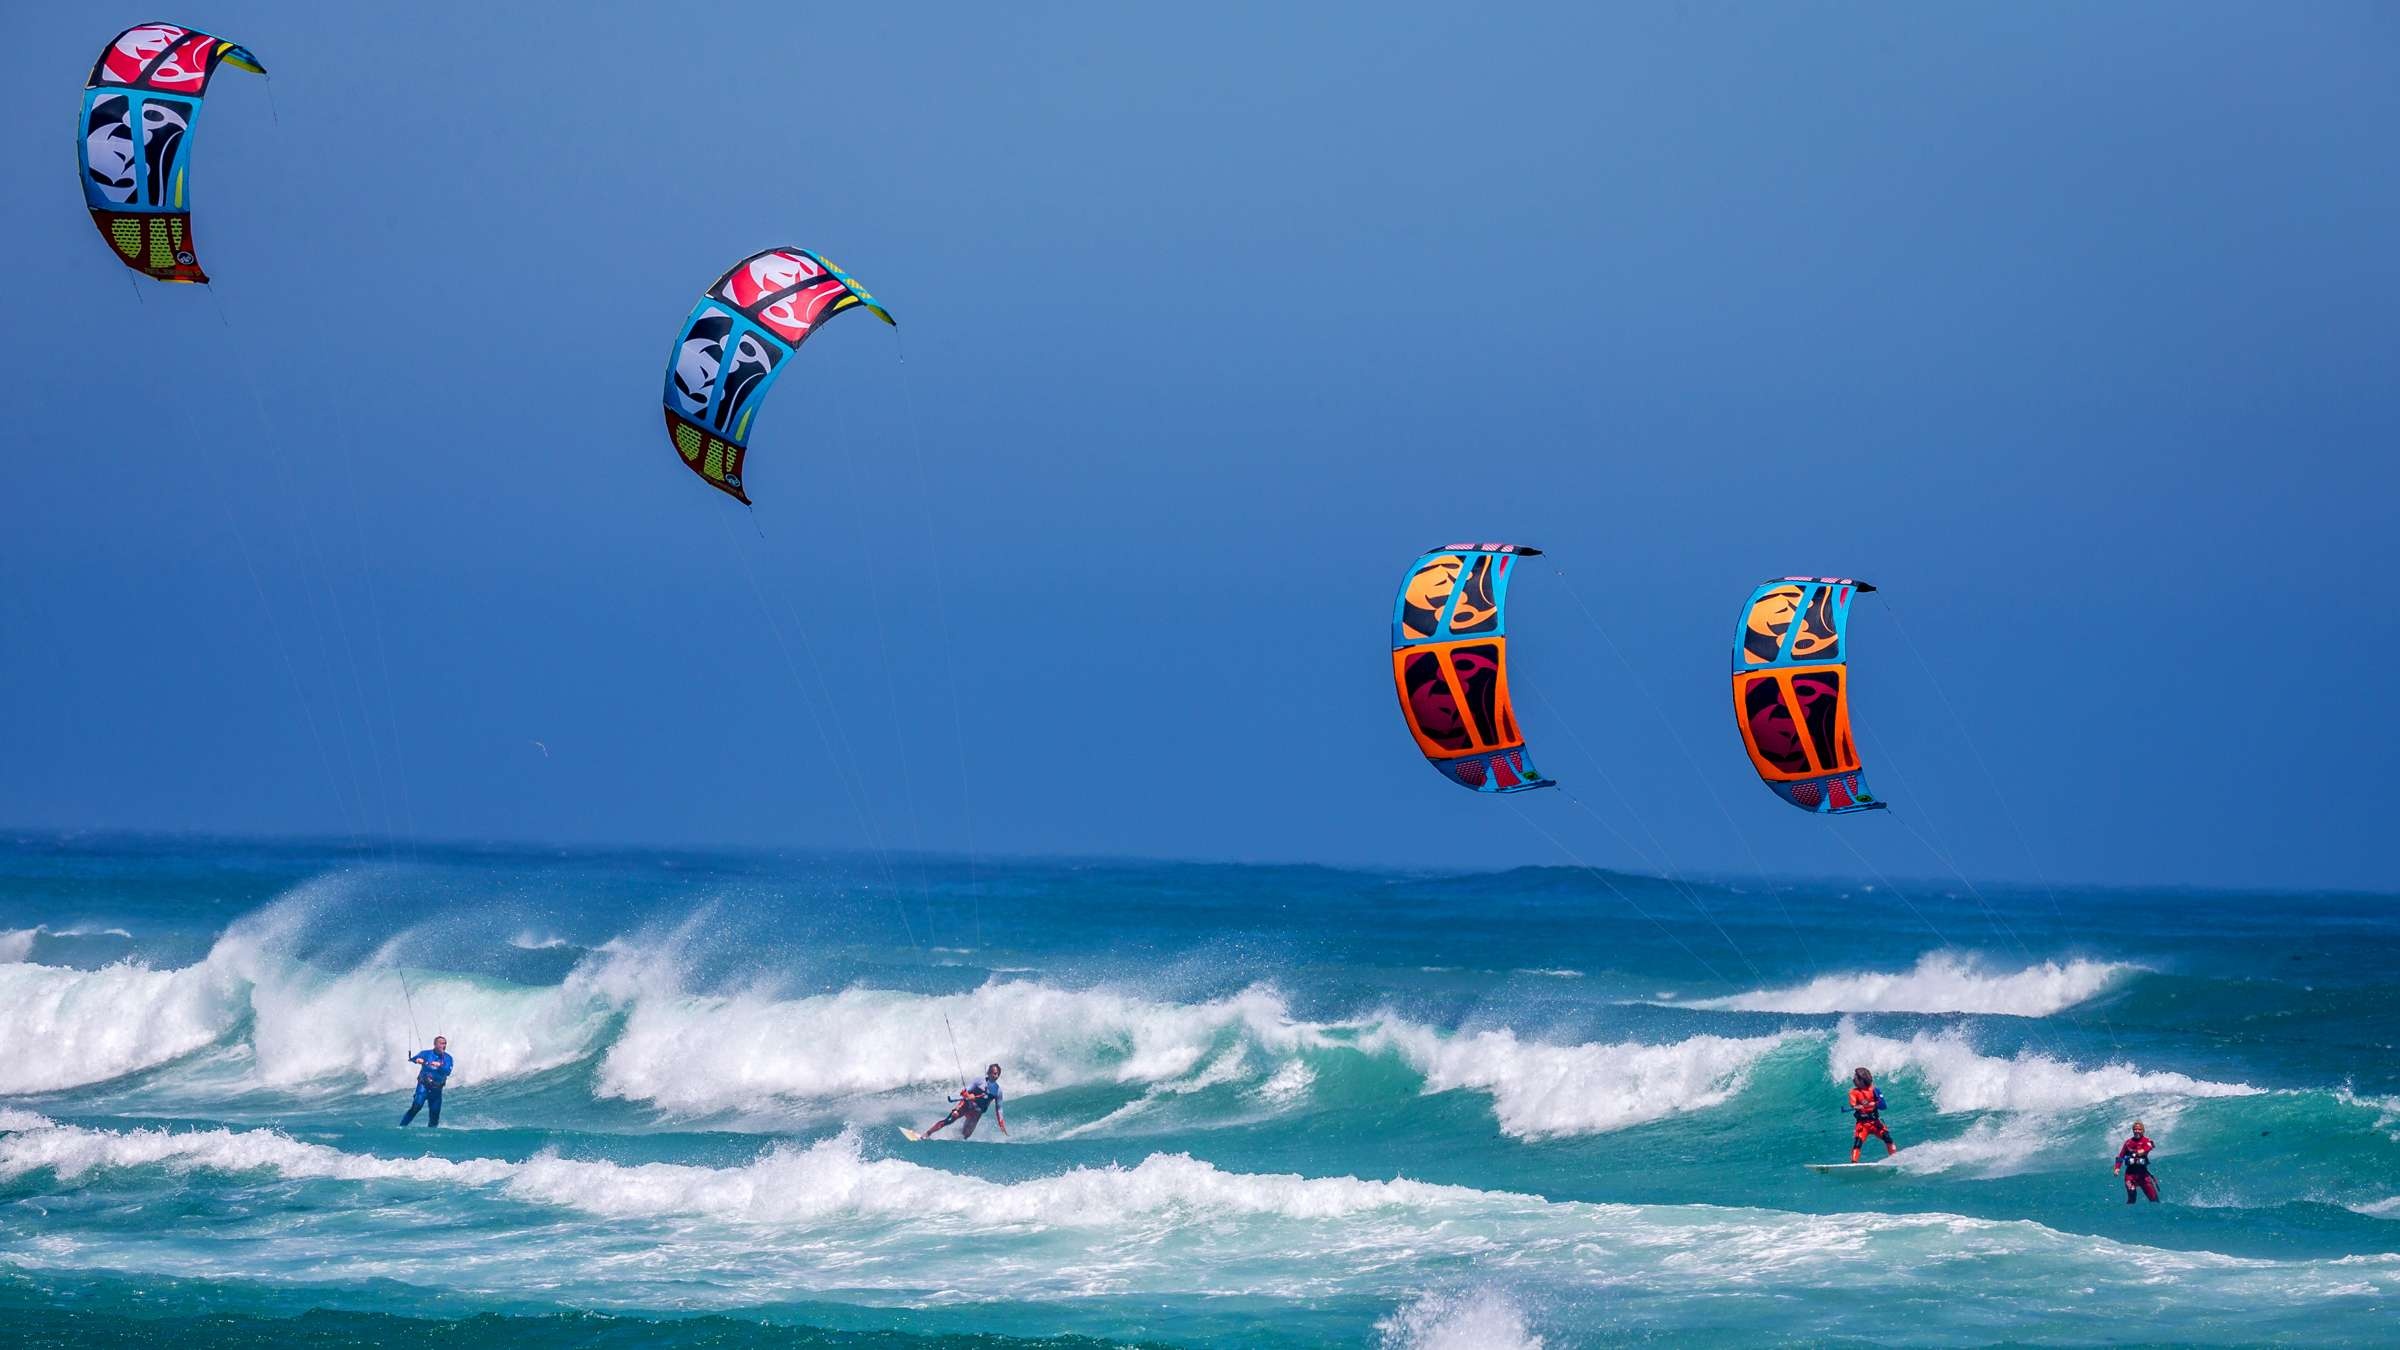 Kite surfing adventure, HD wallpapers, Desktop and mobile, Aquatic thrill, 2400x1350 HD Desktop